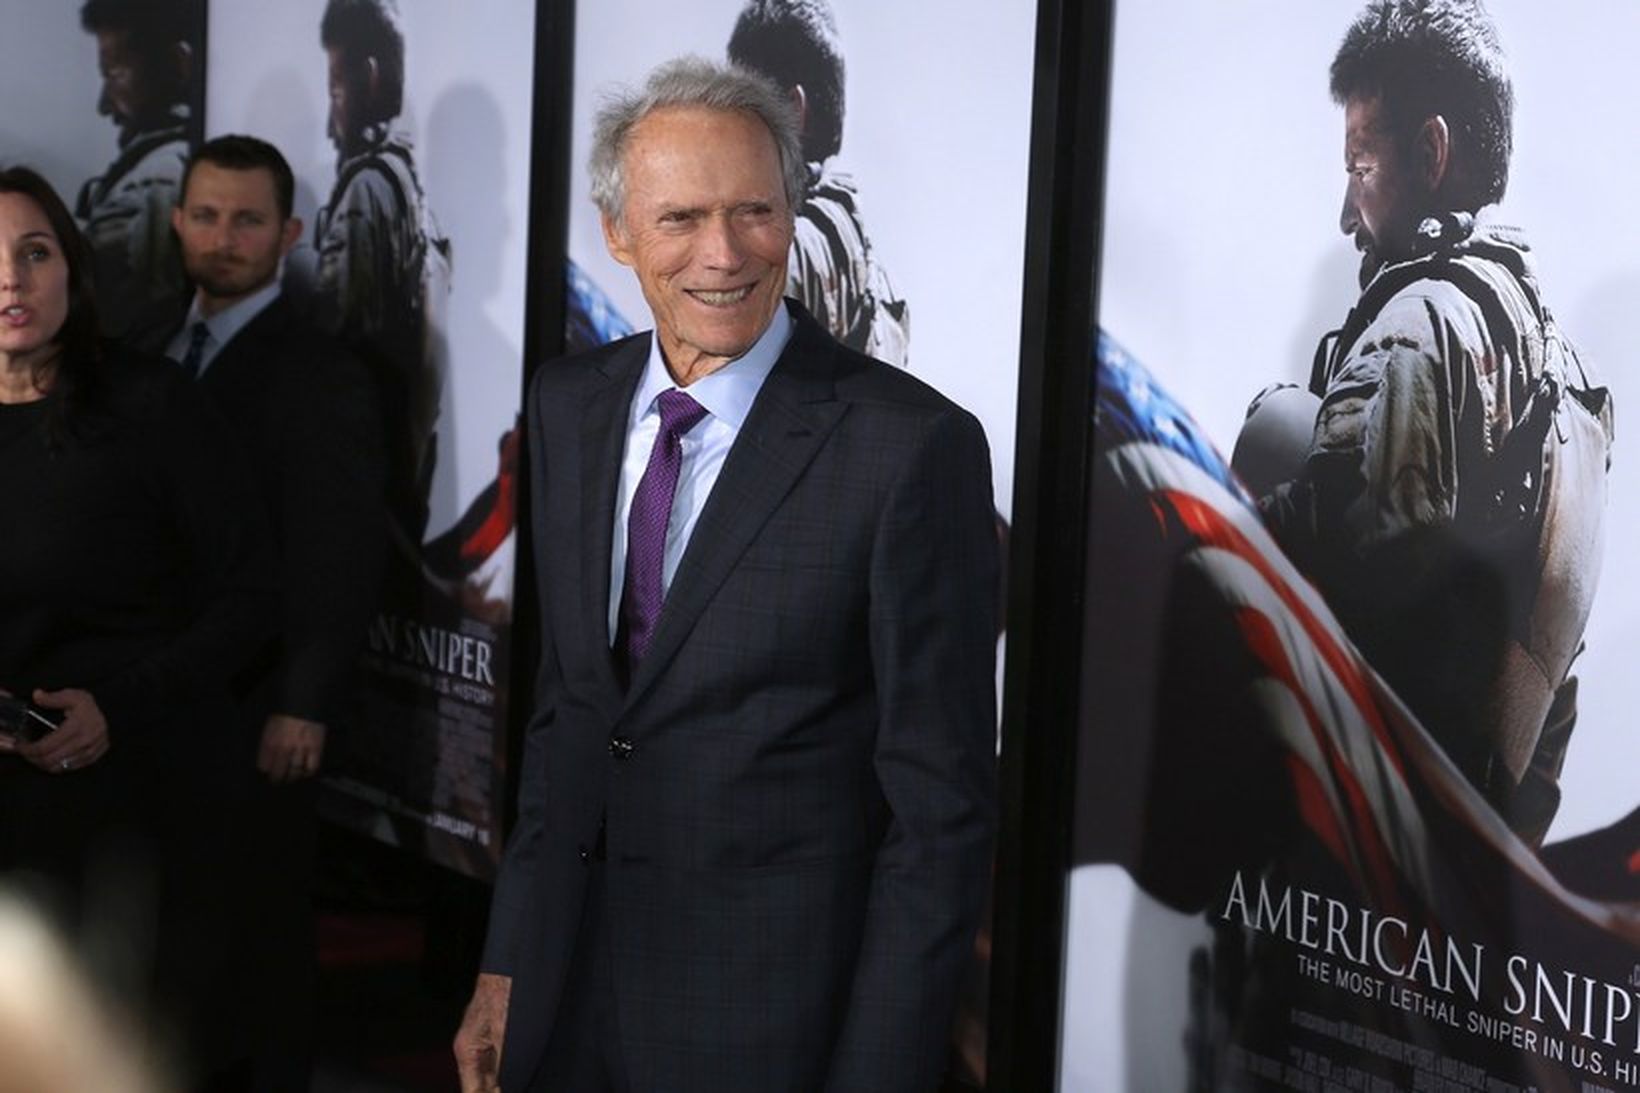 Clint Eastwood, leikstjóri American sniper.